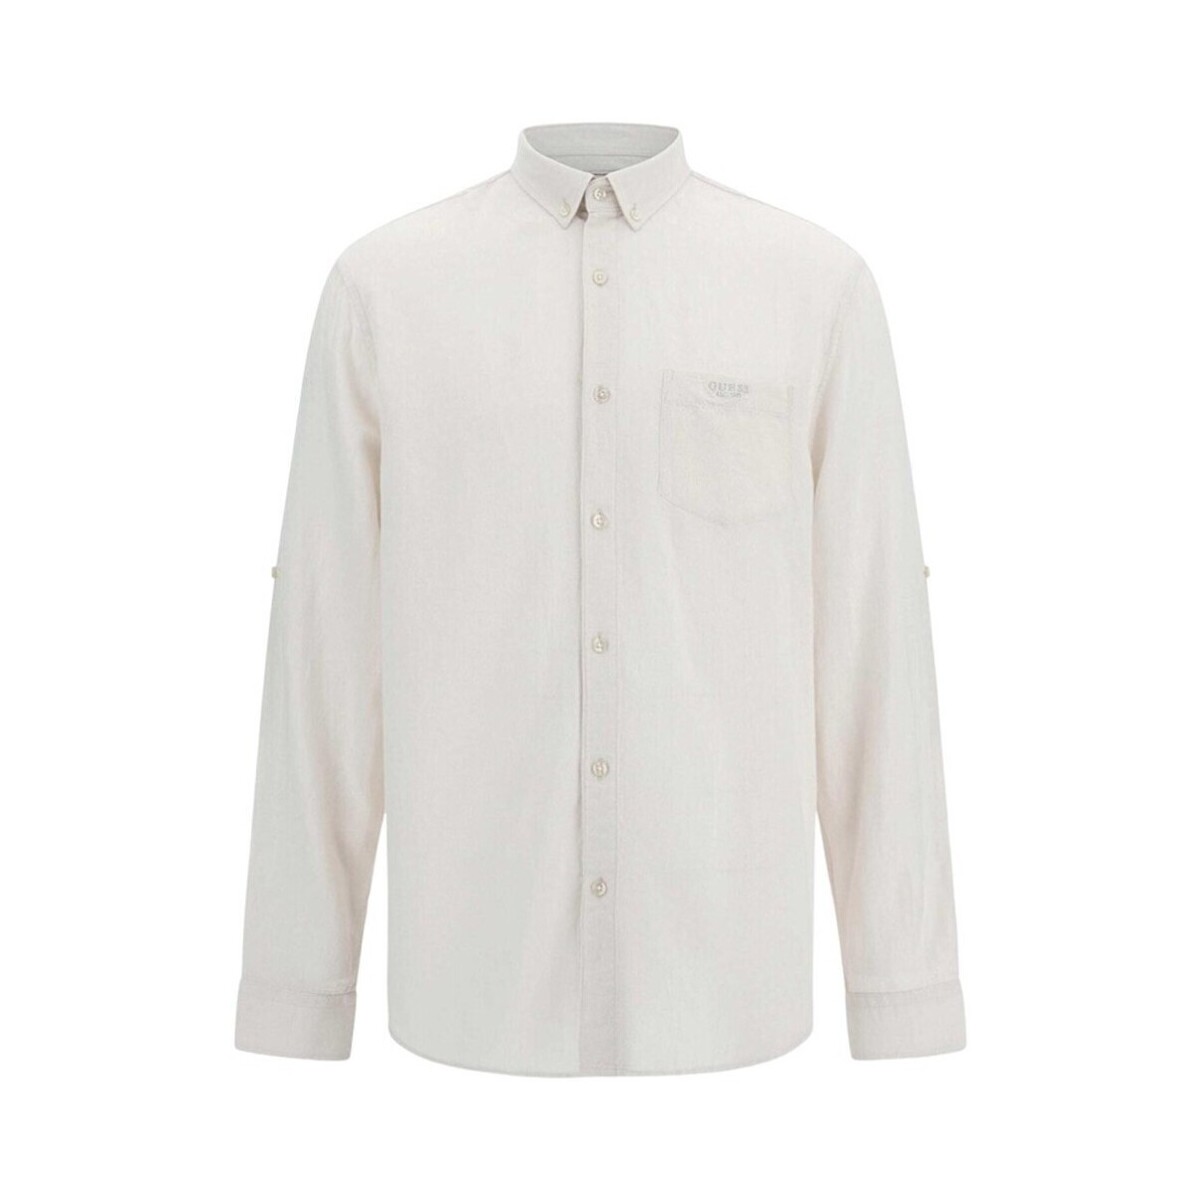 textil Hombre Camisas manga larga Guess M3GH66 WFDT0 Blanco